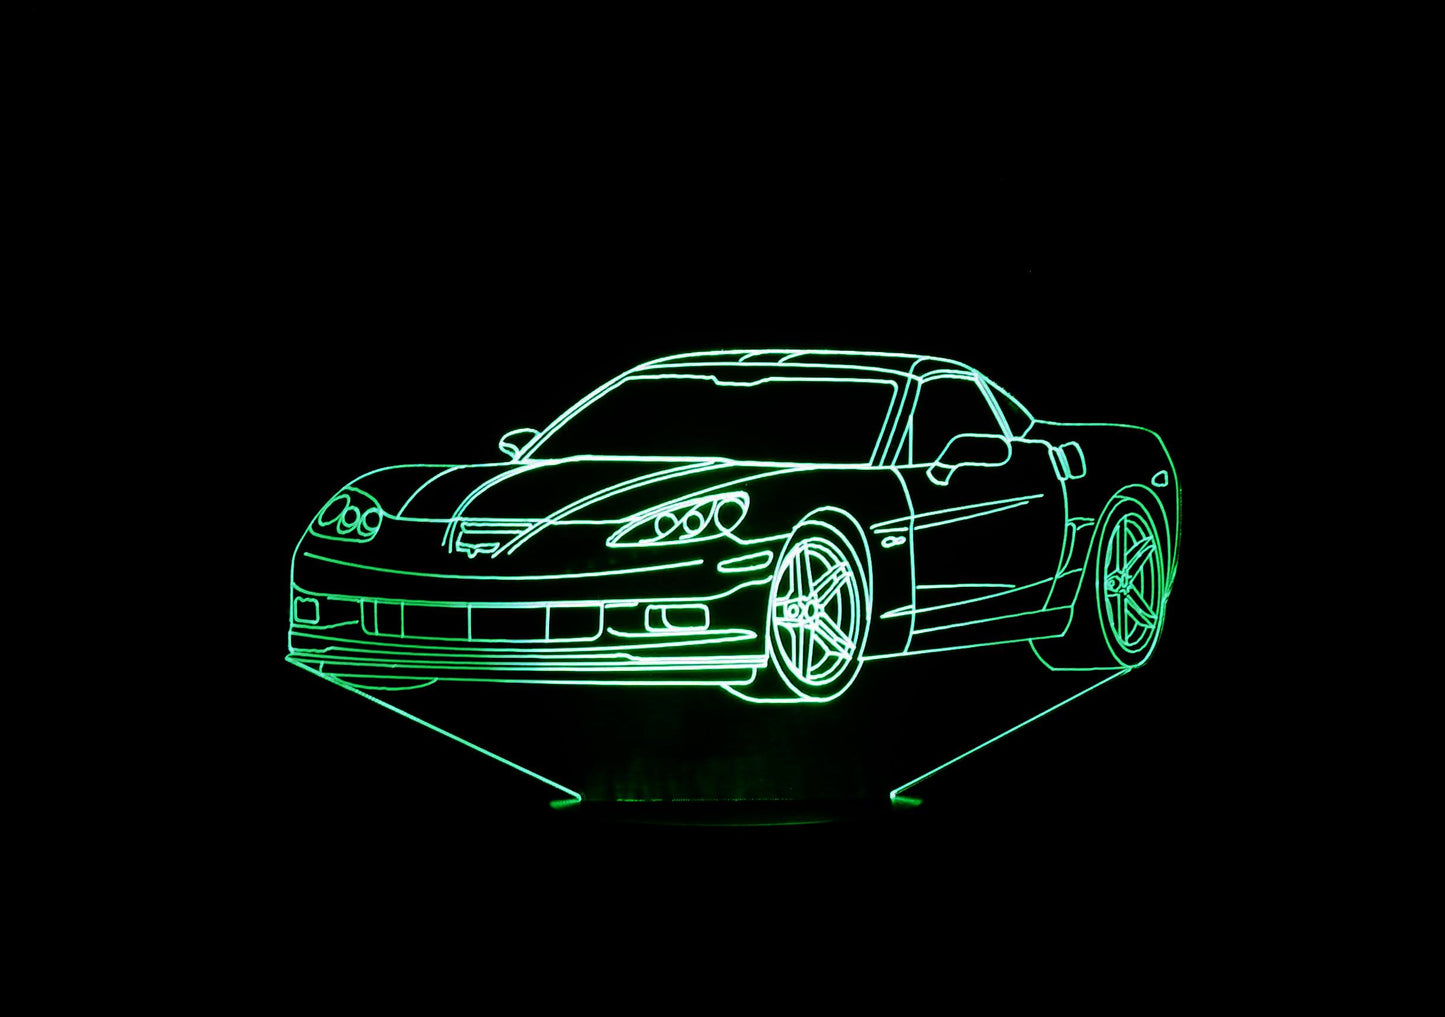 Corvette 2004 3-D Optical Illusion Multicolored Light